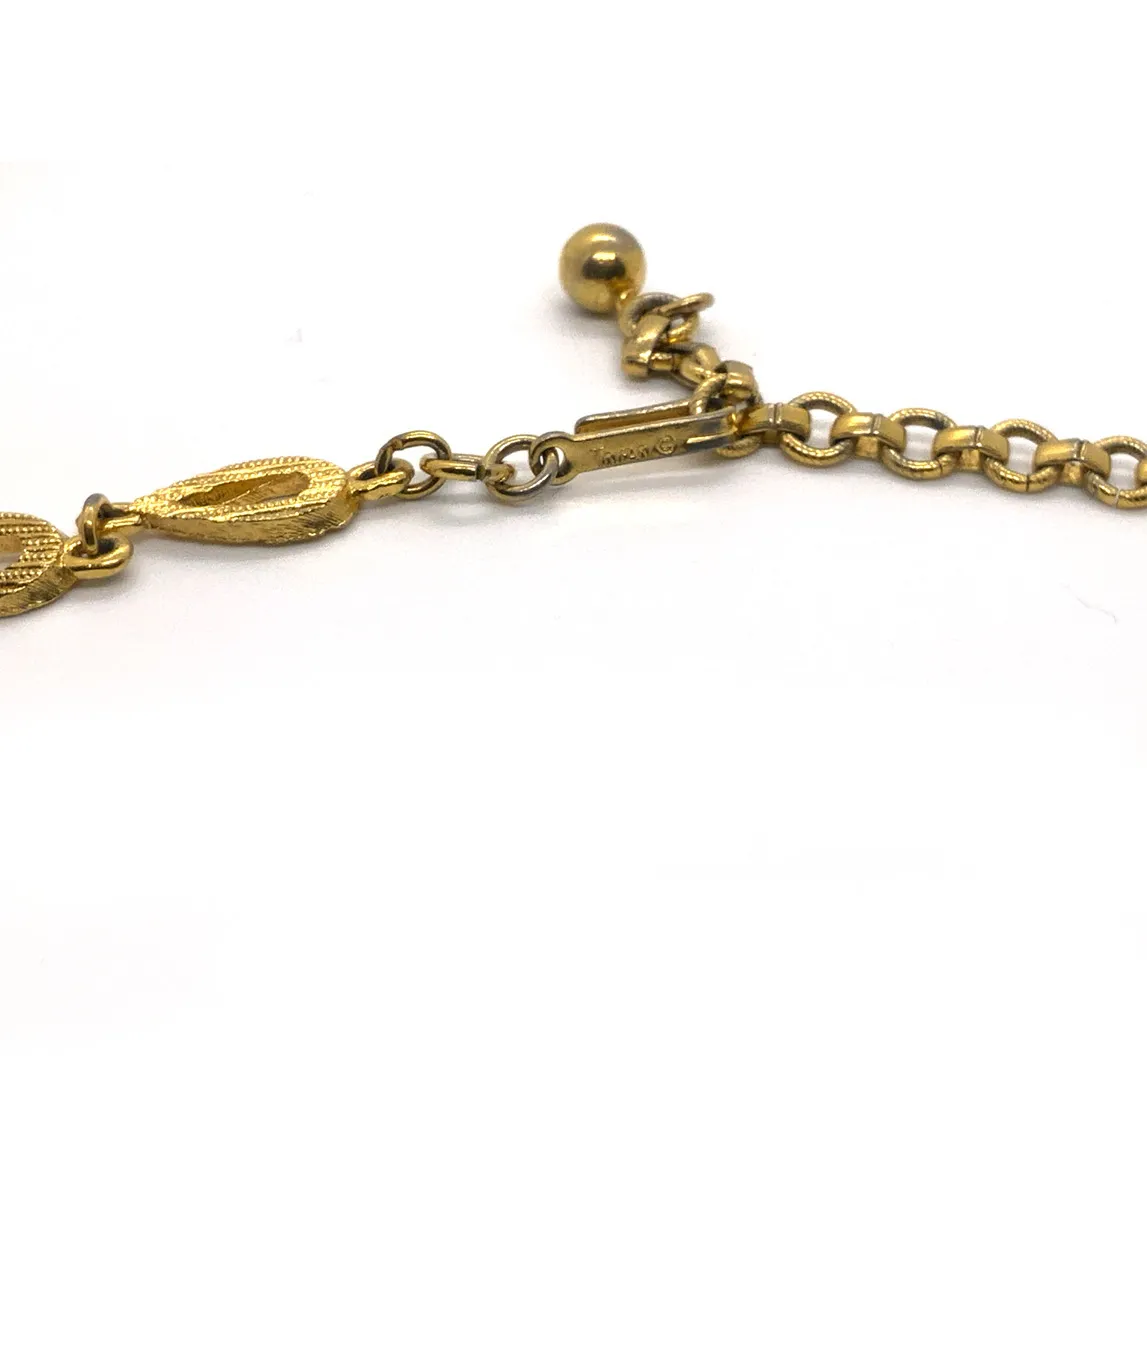 Trifari necklace hook